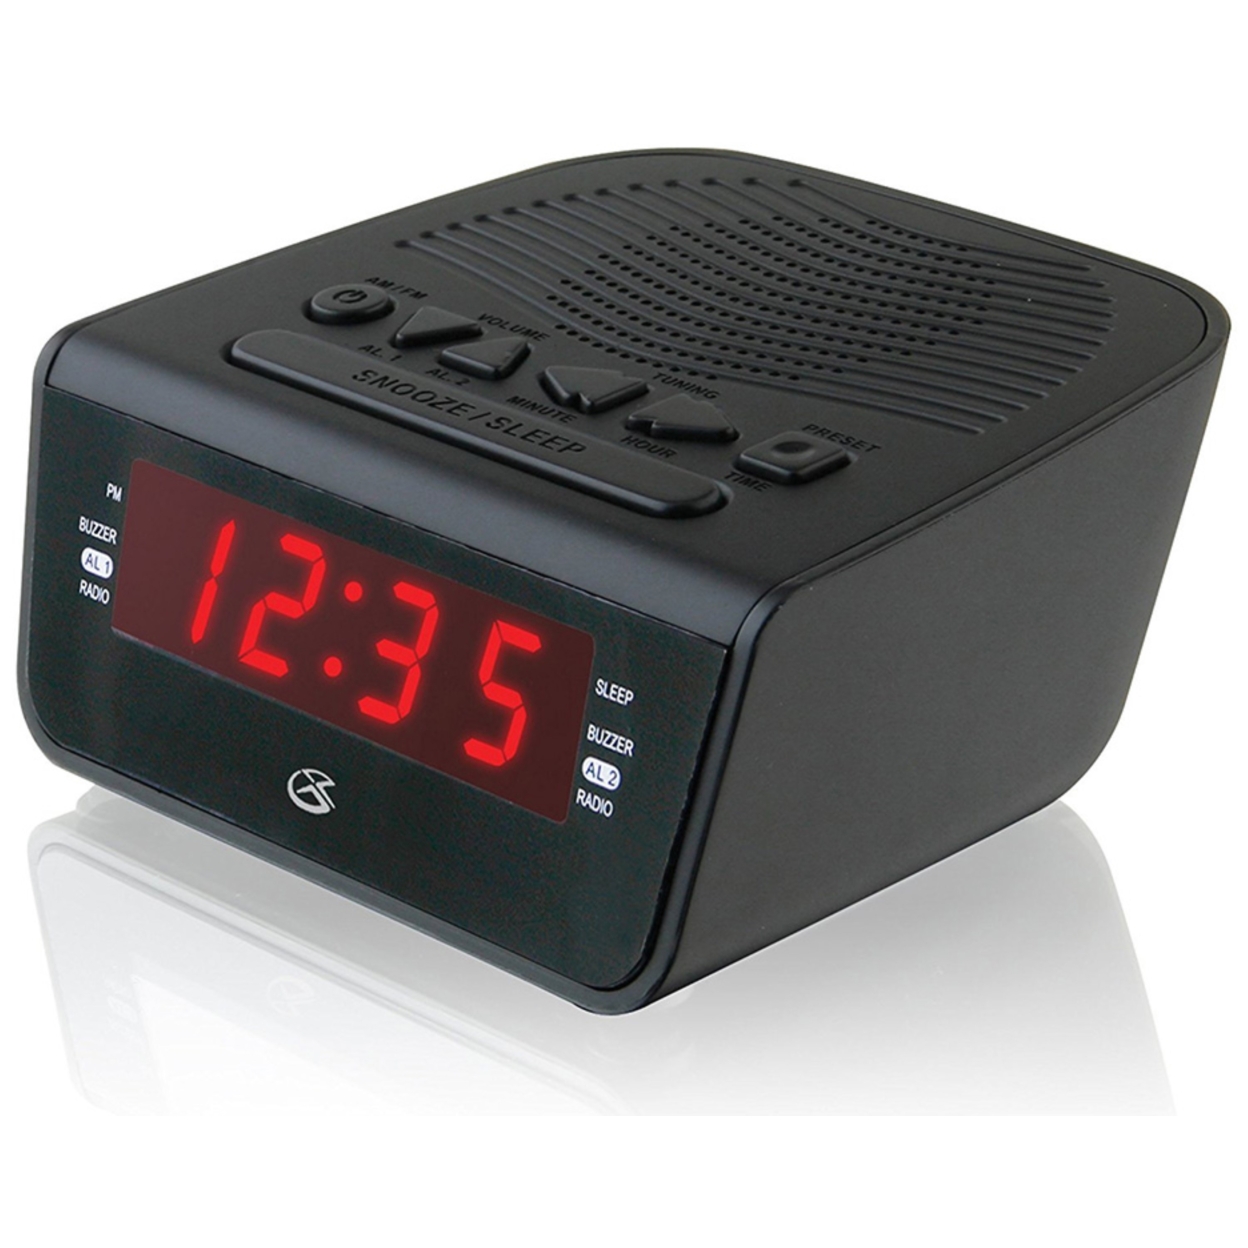 C224B GPX Dual Alarm Clock AM/FM Radio With Red LED Display BRAND NEW